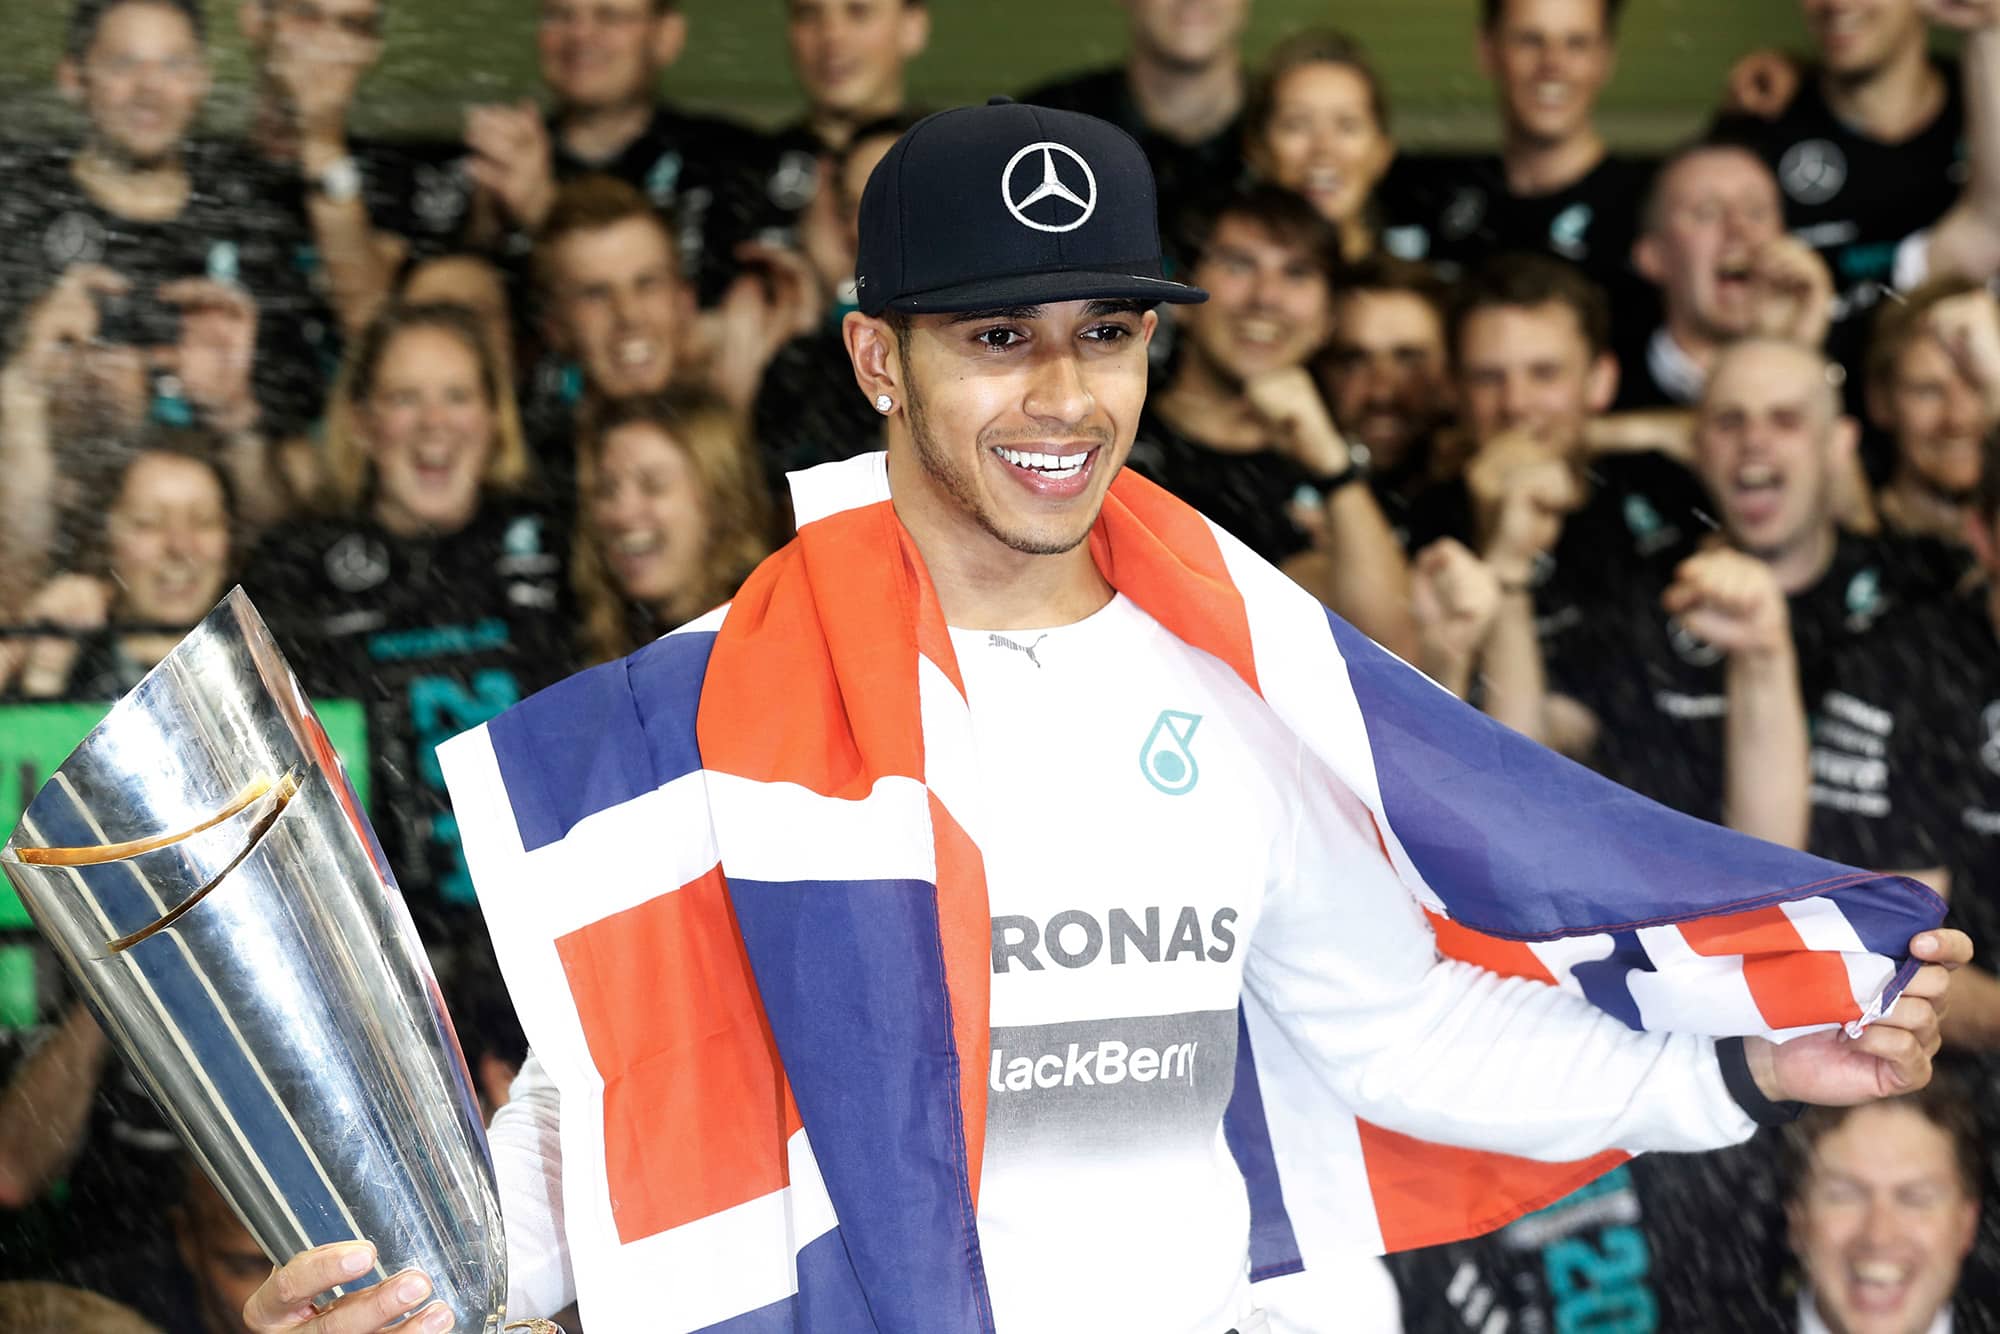 Lewis Hamilton celebrates winning his second F1 world championship in 2014